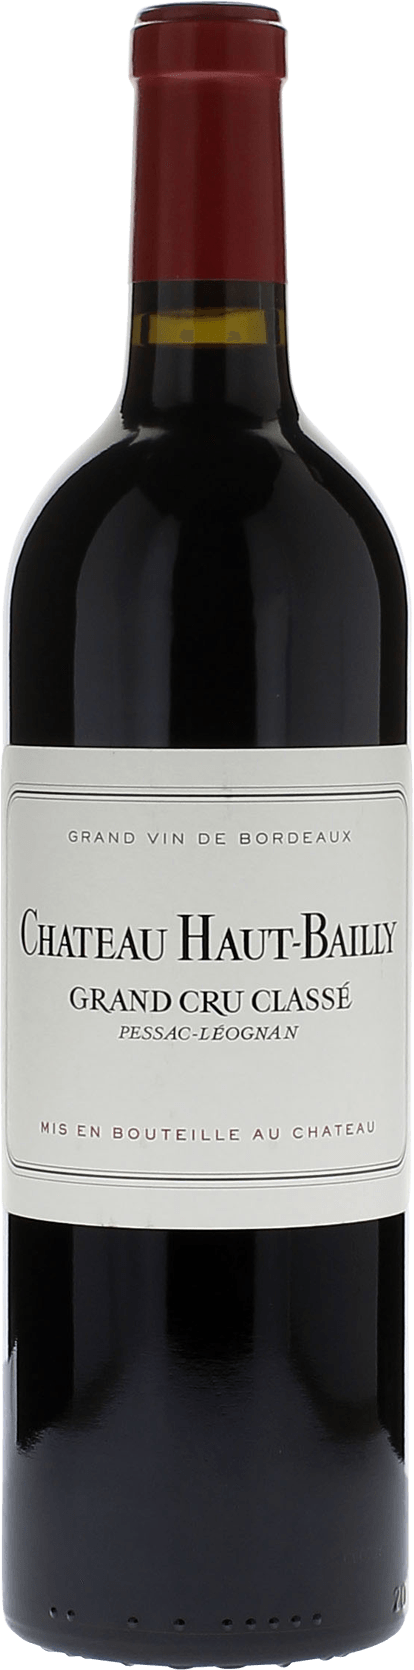 Haut bailly 1982 cru class Pessac-Lognan, Bordeaux rouge